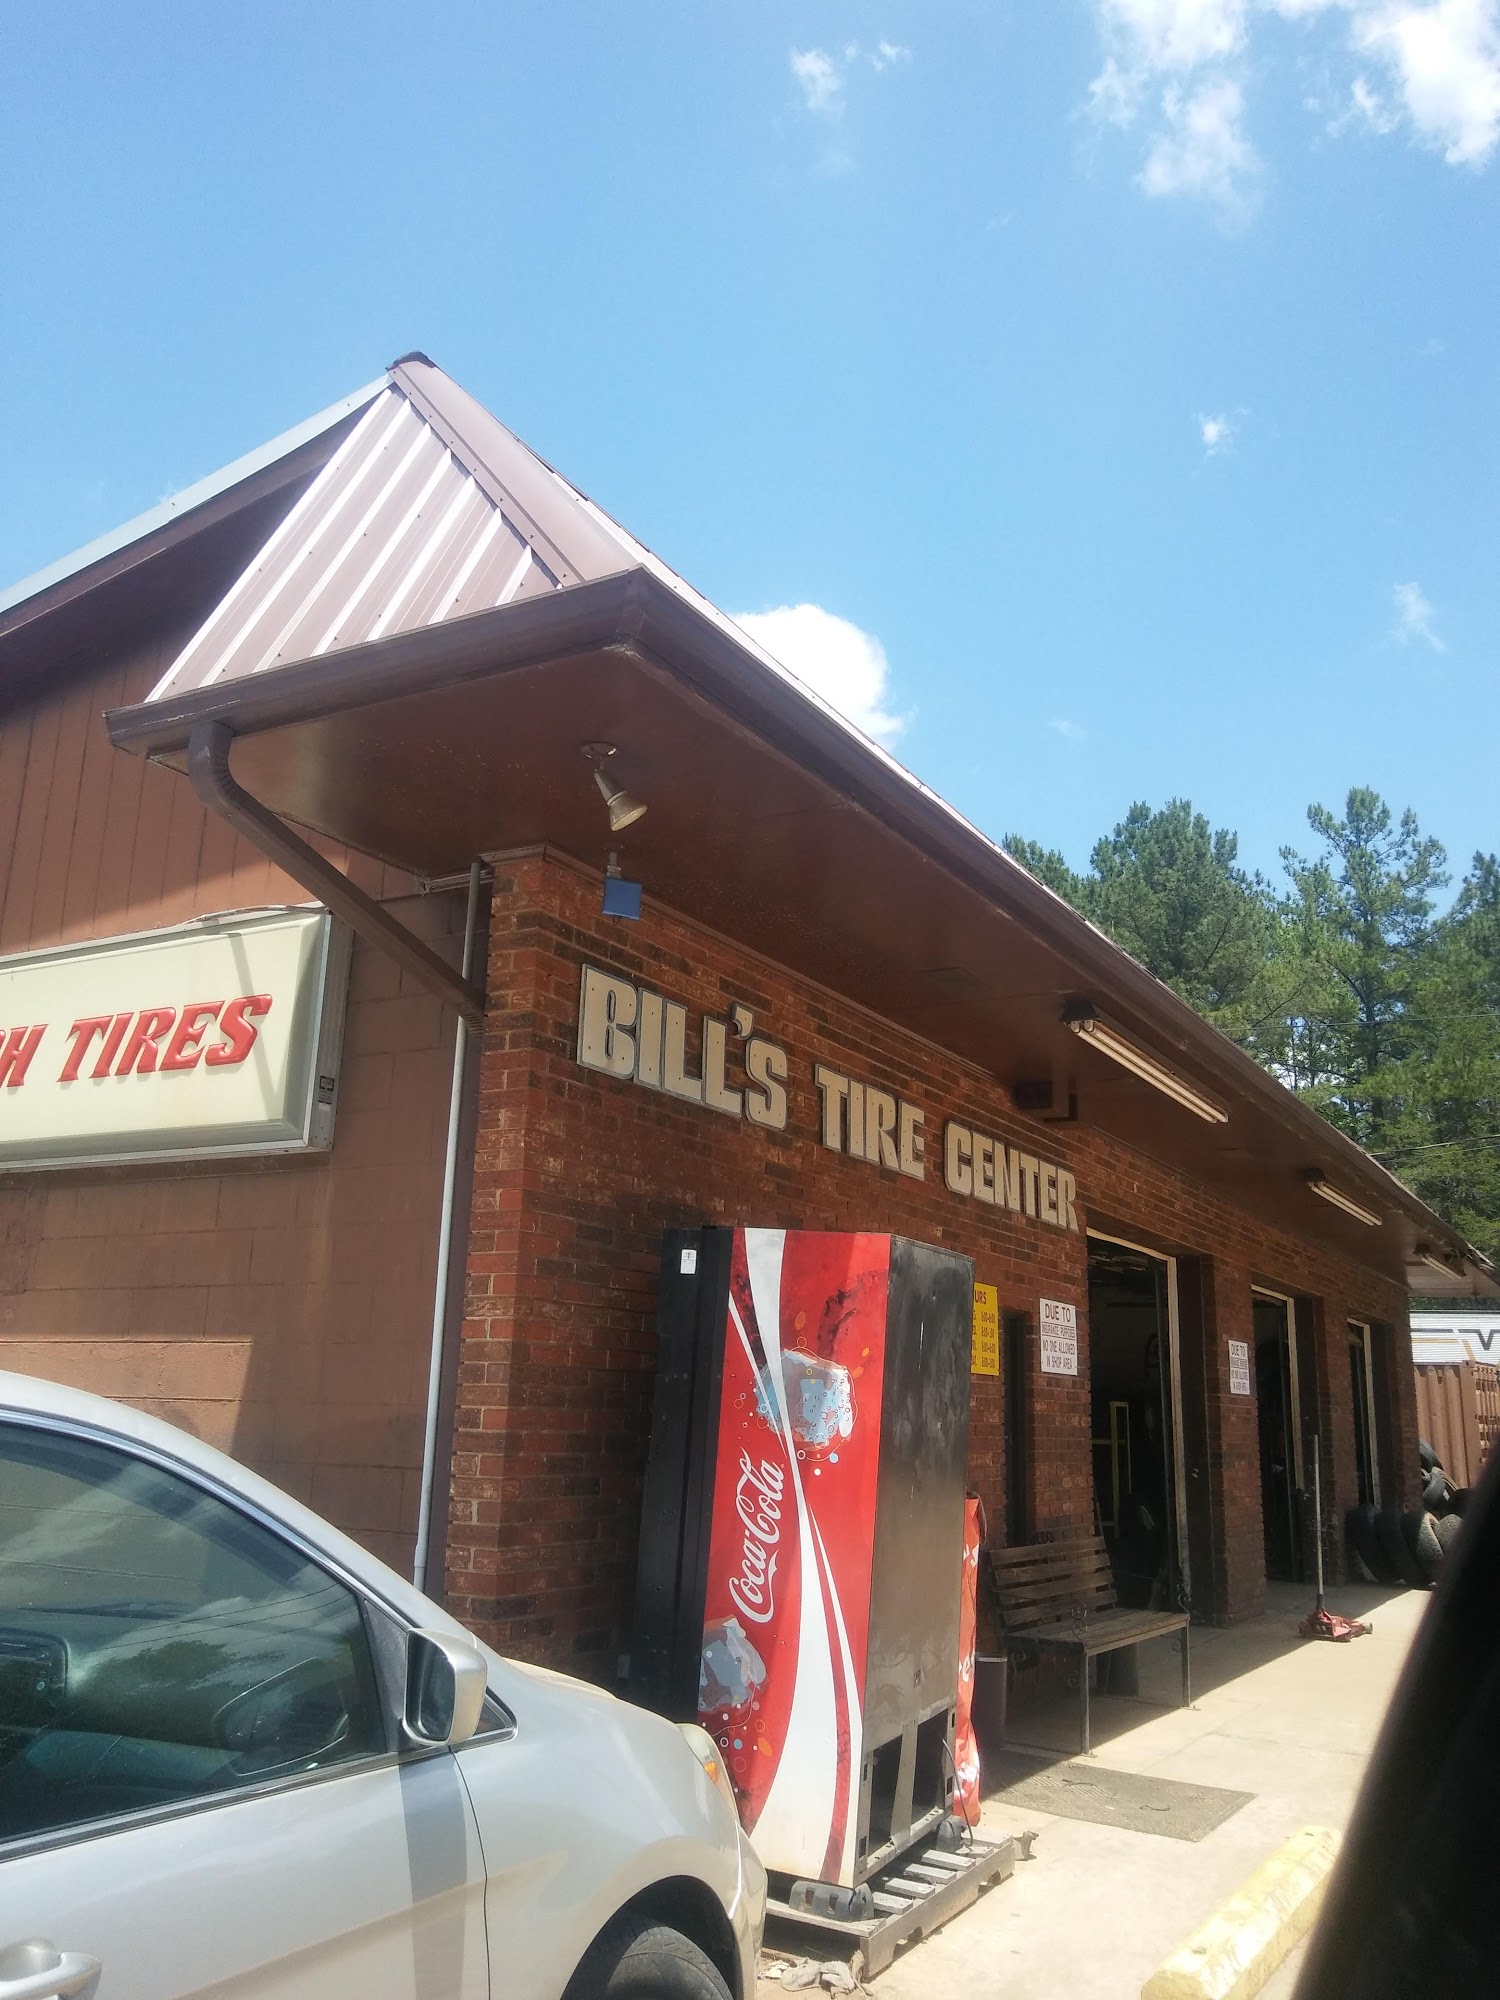 Bill's Tire Center